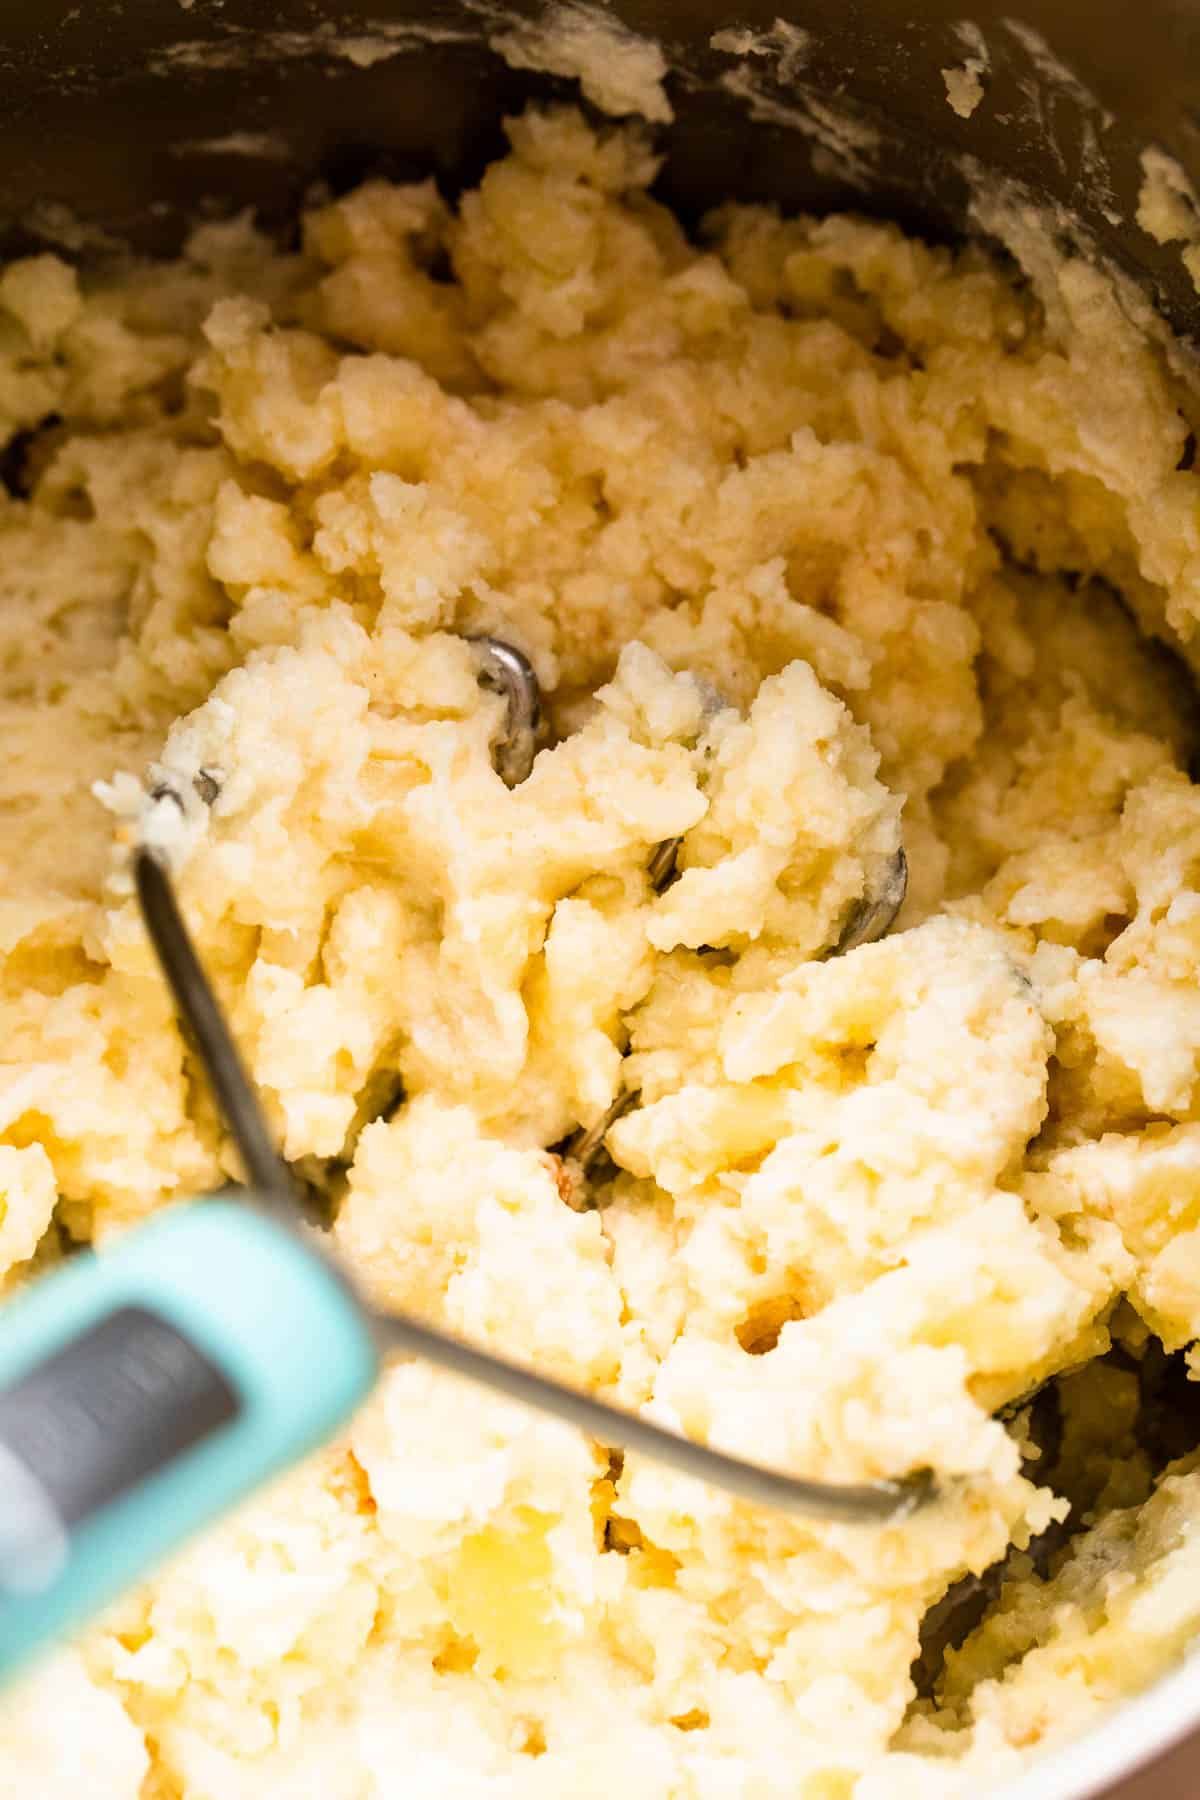 mashing potatoes with a potato masher